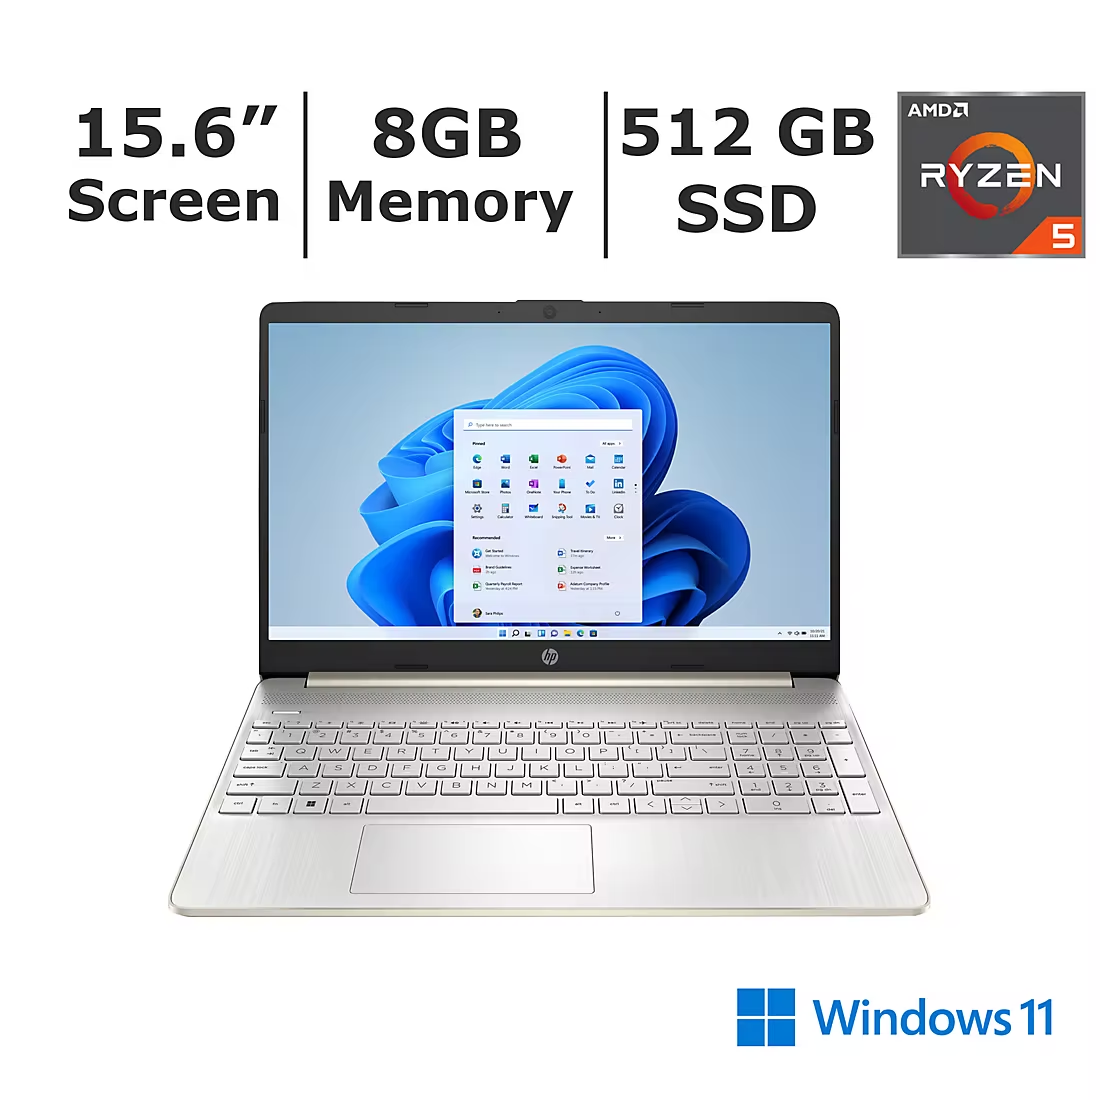 HP 15.6 inch Full HD Laptop, AMD Ryzen 5 5500U Processor, 8GB Memory, 512GB SSD, AMD Radeon Graphics, Silver